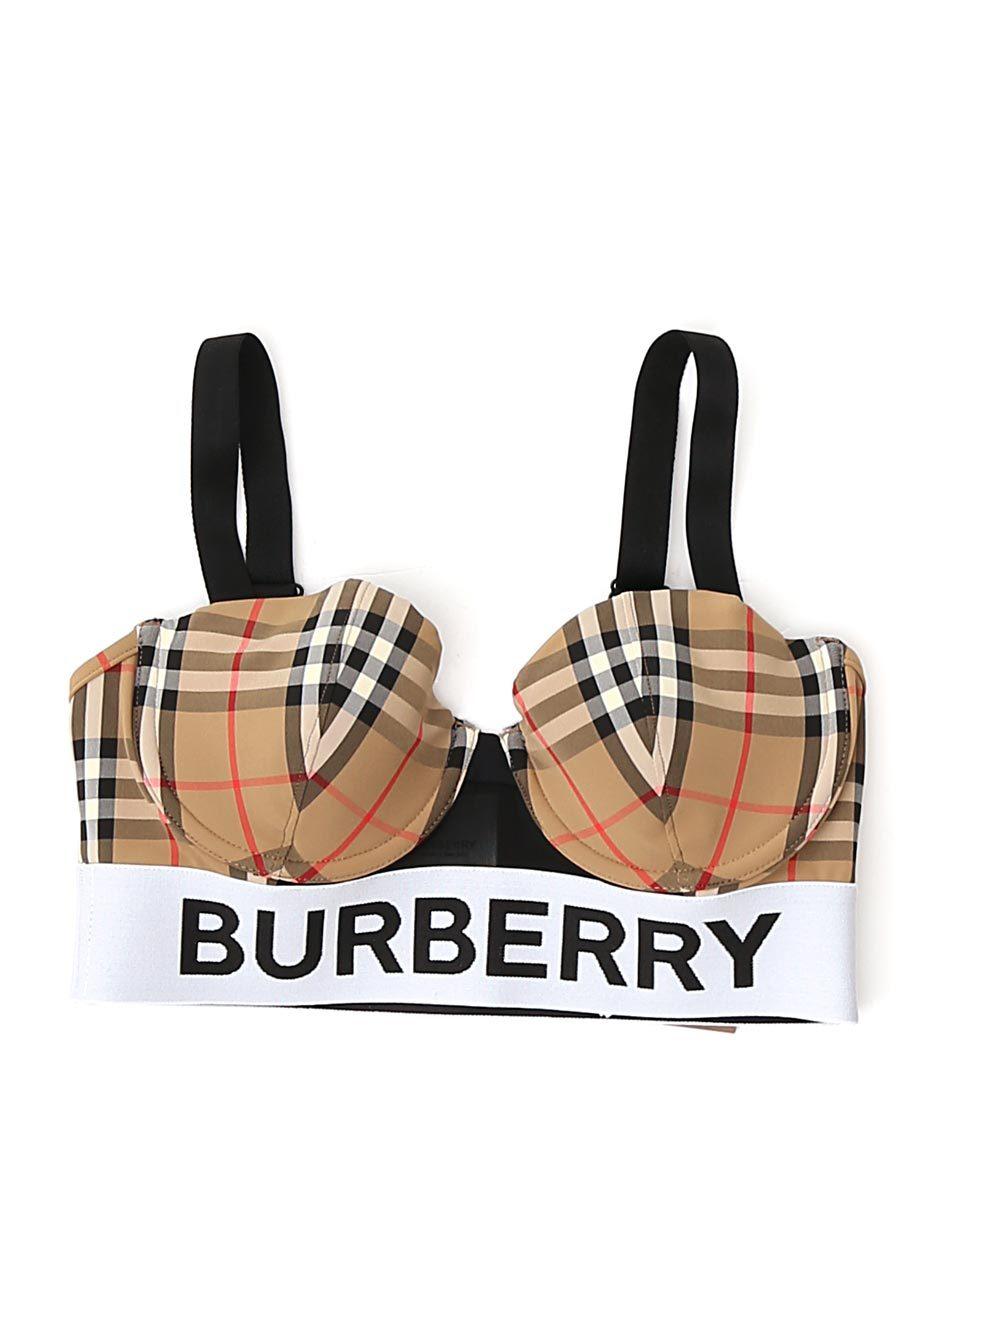 Actualizar 38+ imagen burberry logo bra - Abzlocal.mx